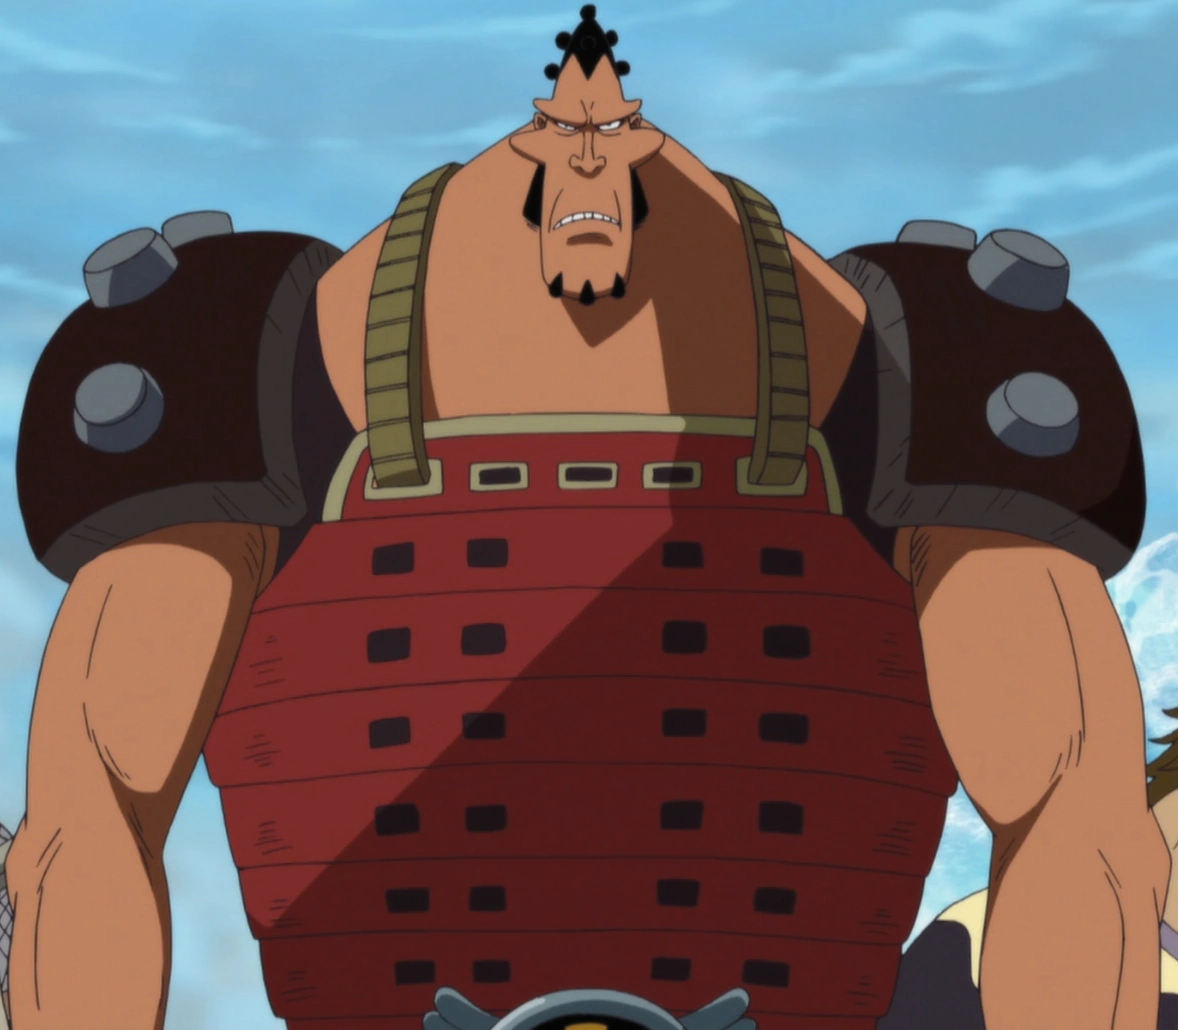 One Piece (season 20) - Wikipedia